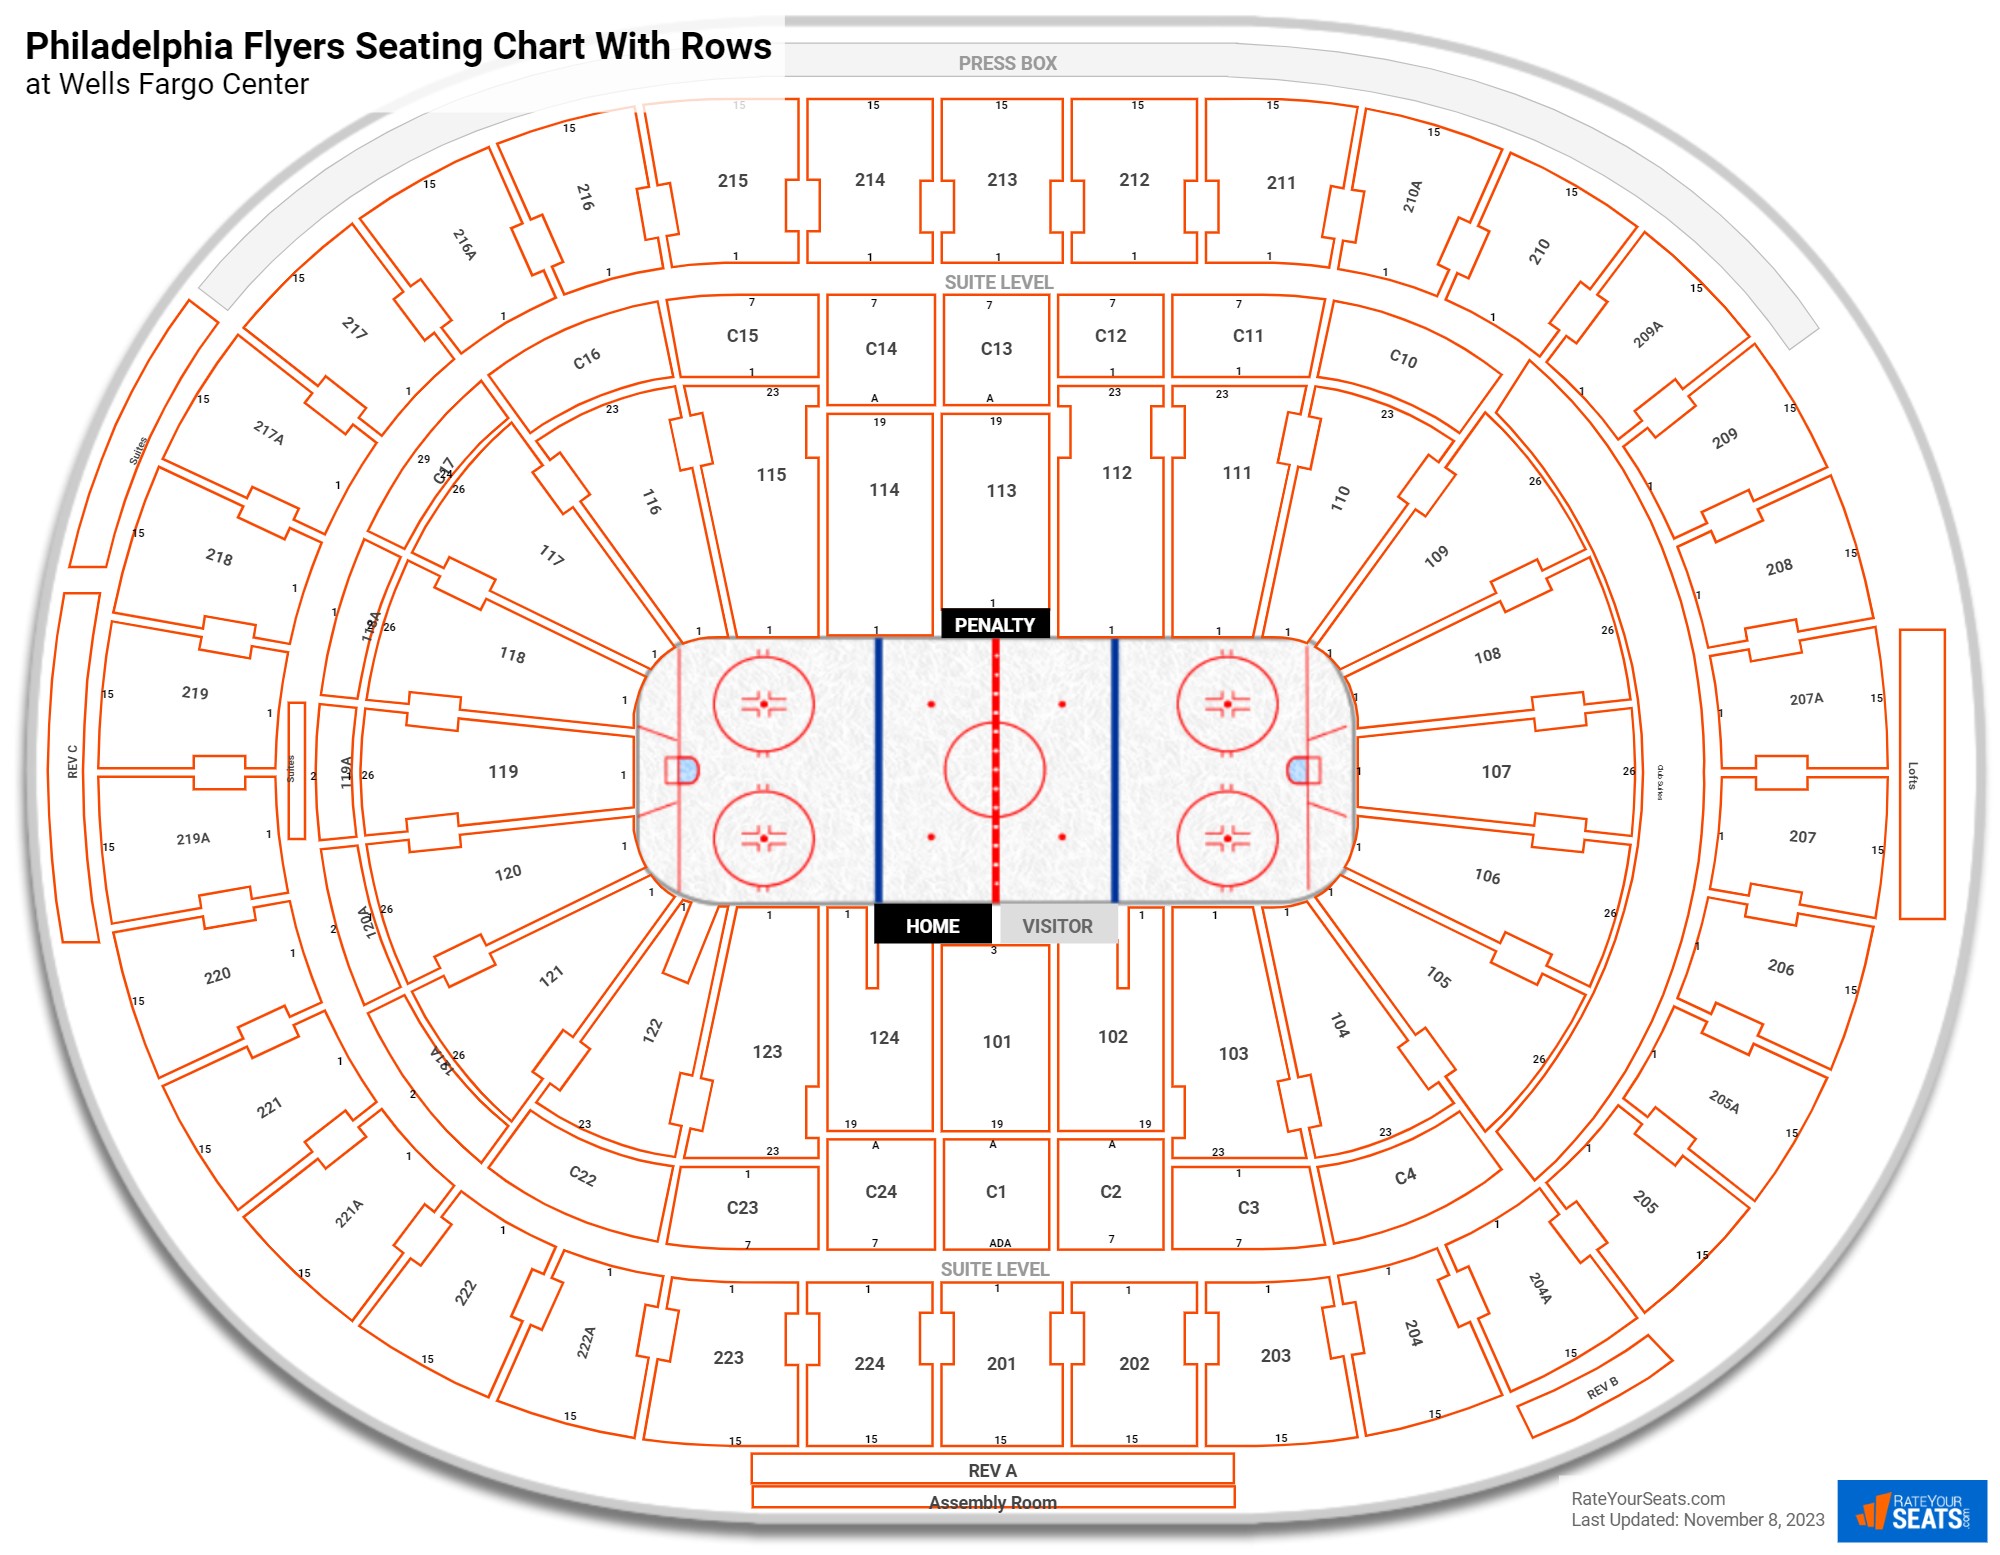 Philadelphia Flyers Seating Charts at Wells Fargo Center